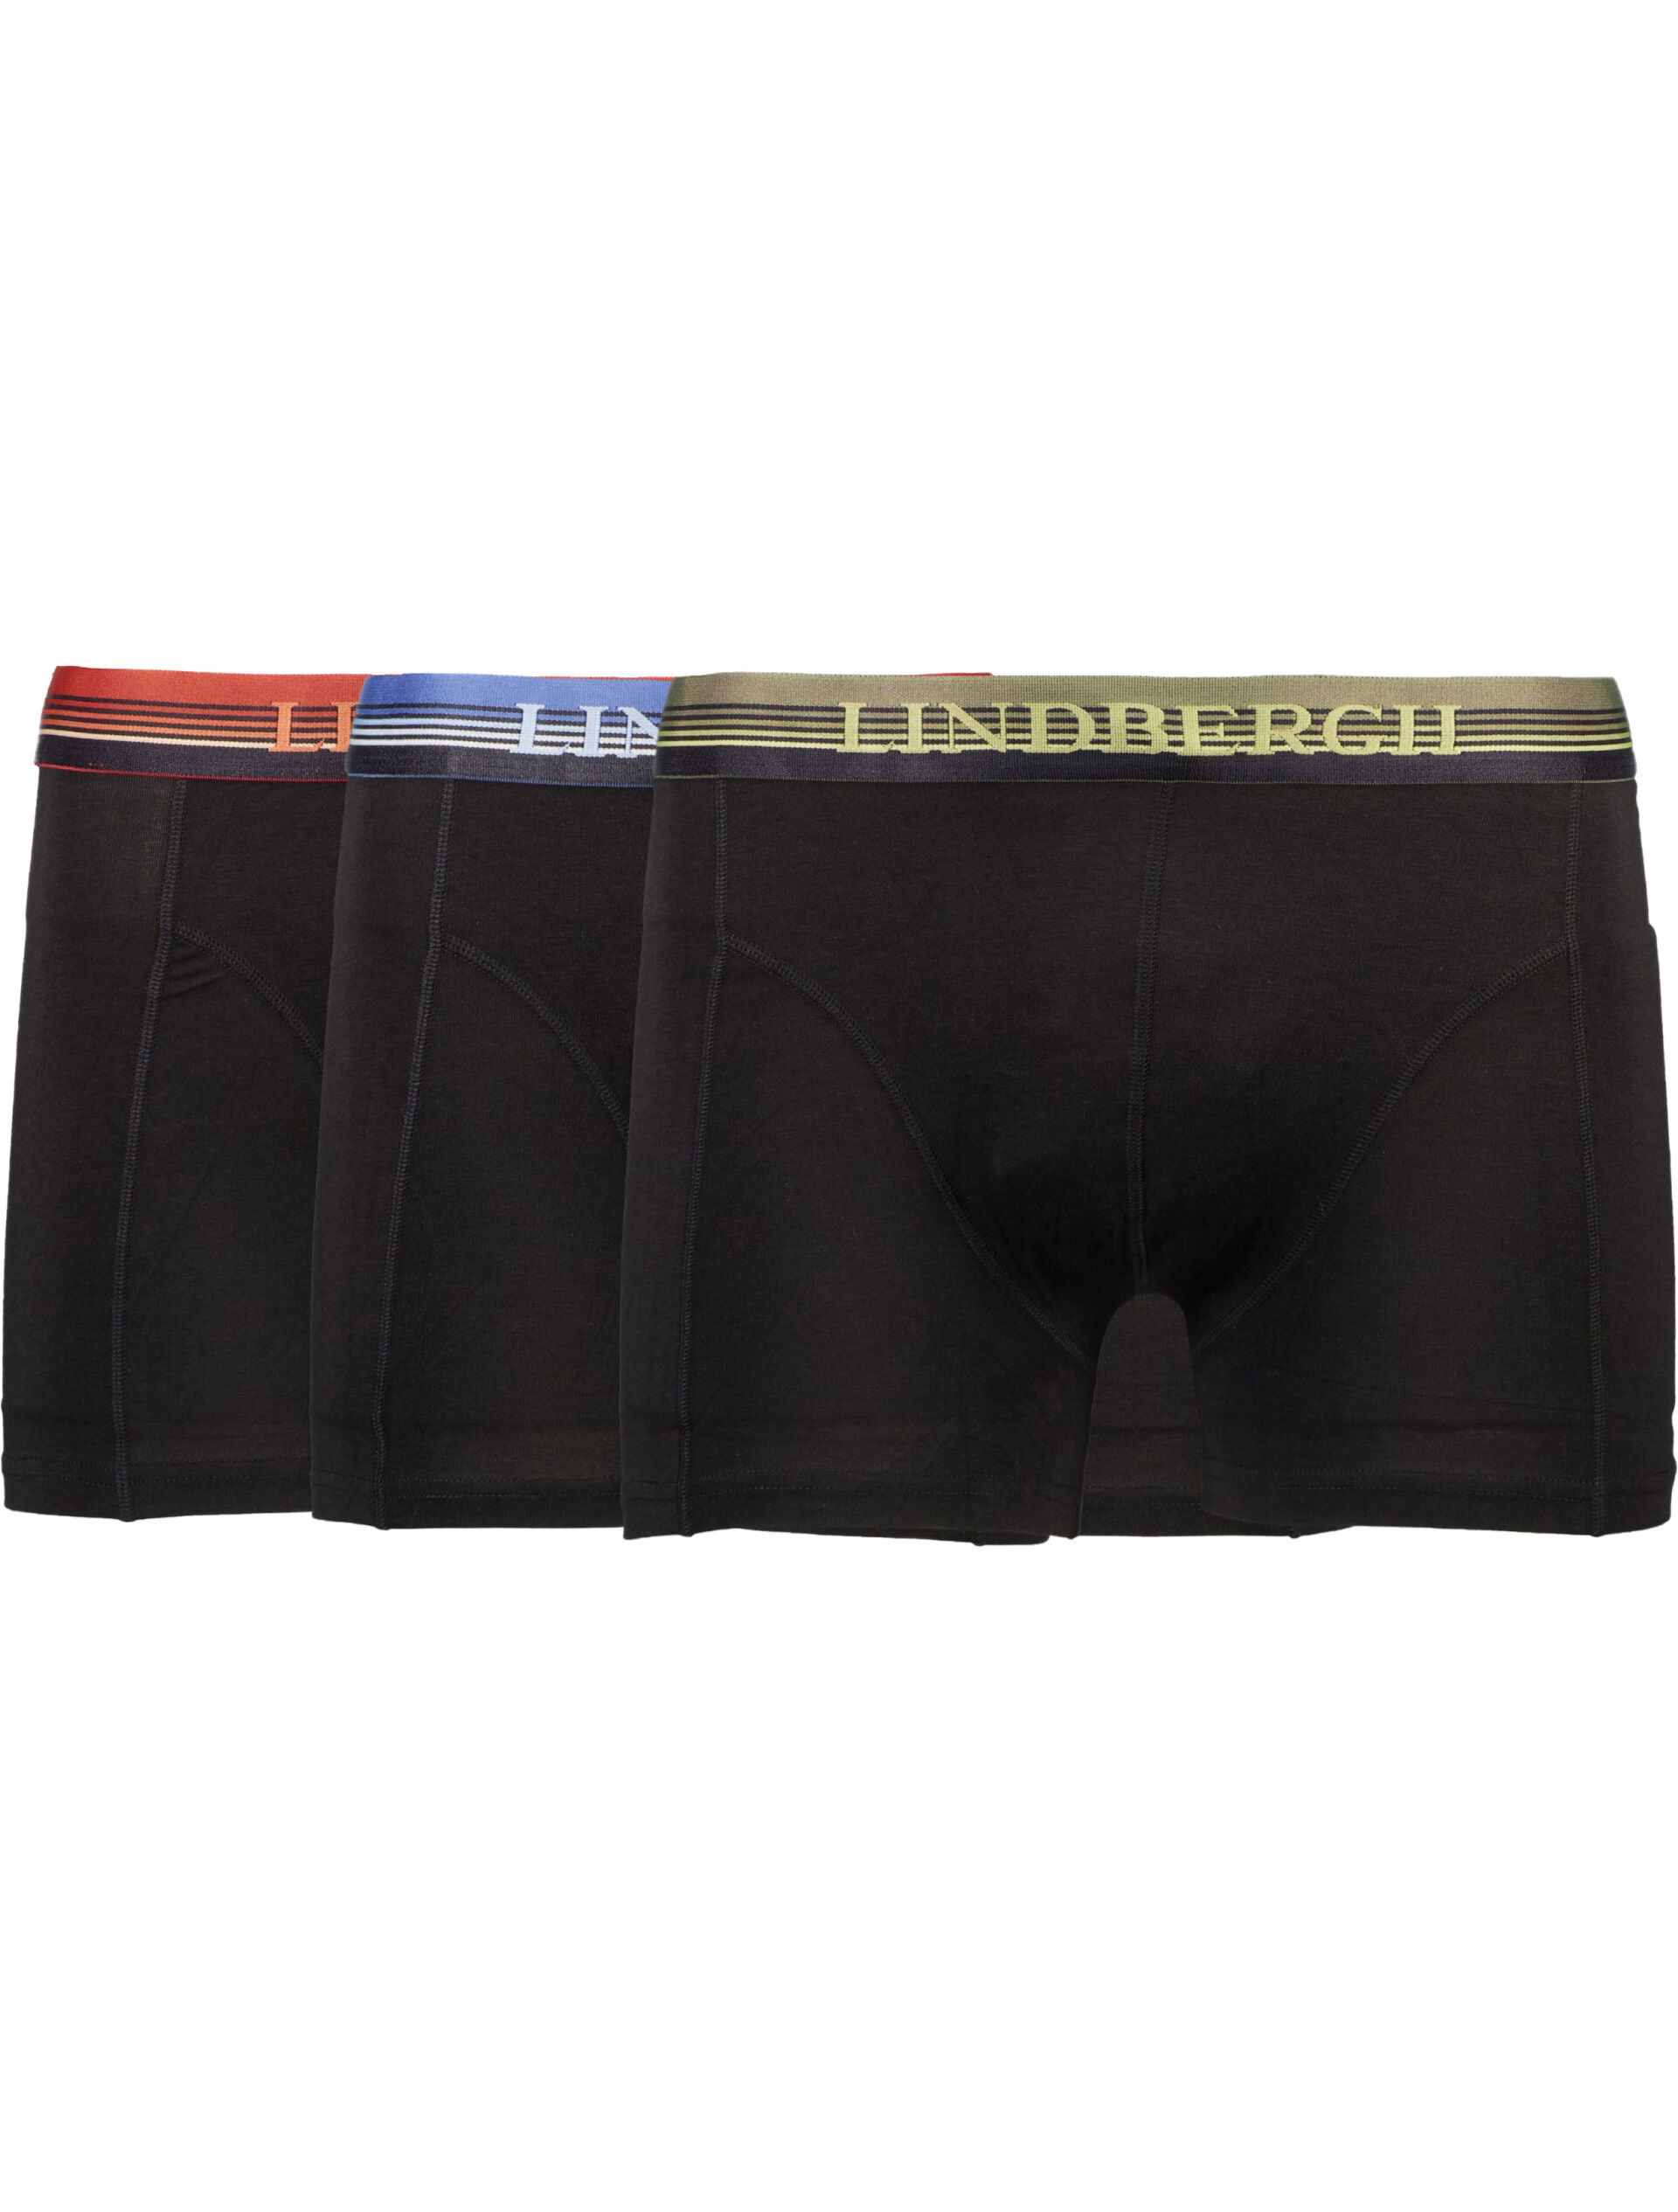 Lindbergh  | 3-pack